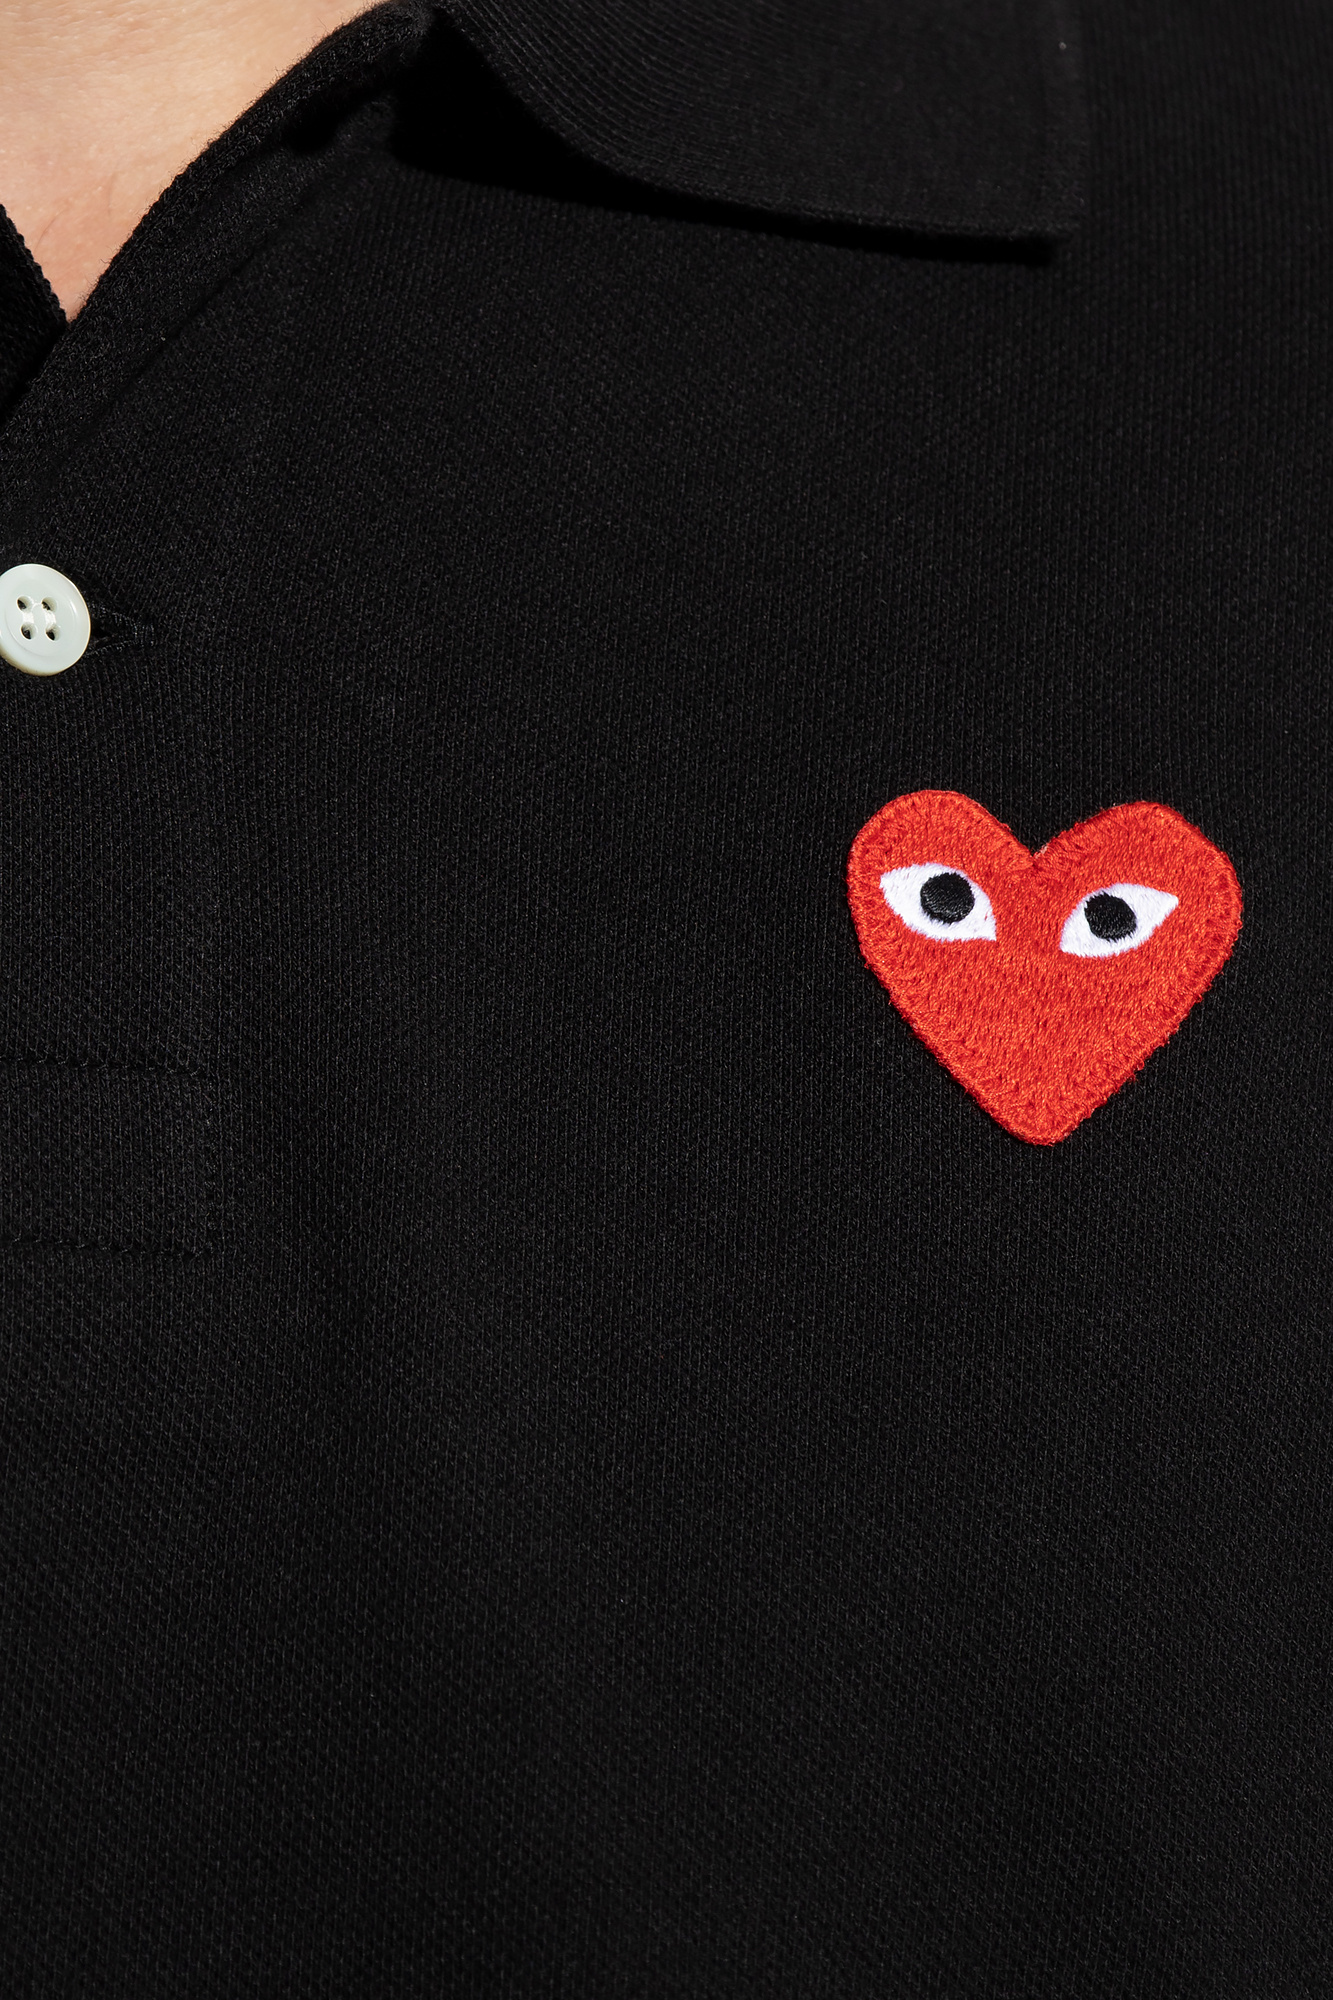 robes belts mats polo-shirts Shirts Heart motif polo shirt